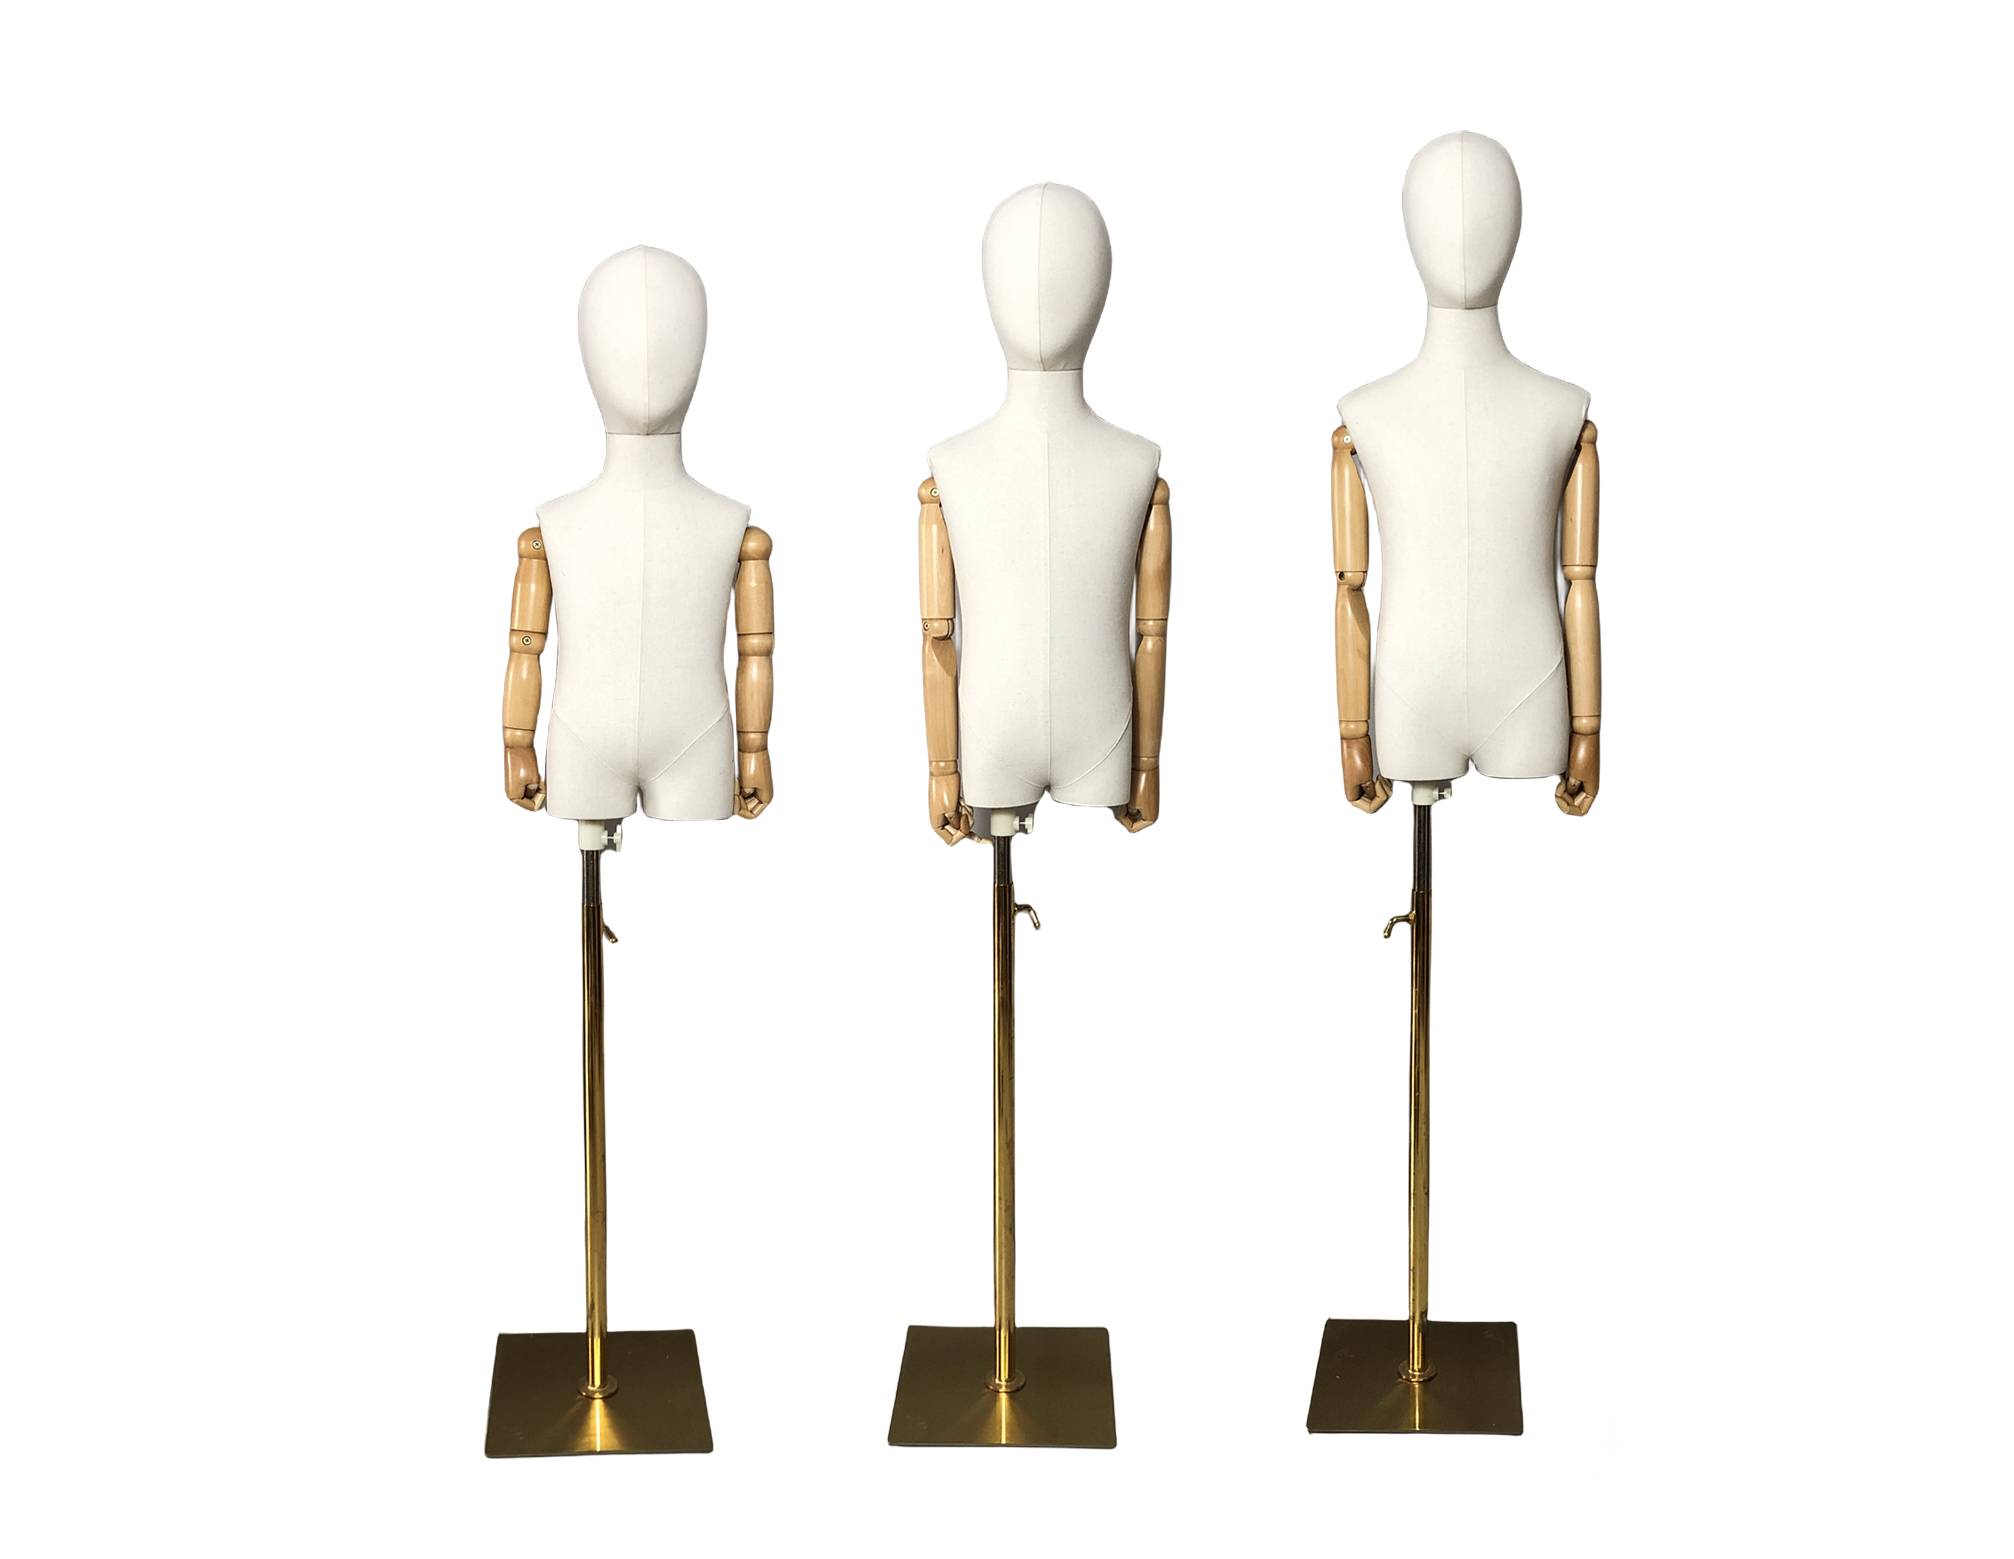 Adjustable Gold Square Base White Linen Child Mannequin Dress Form Teo